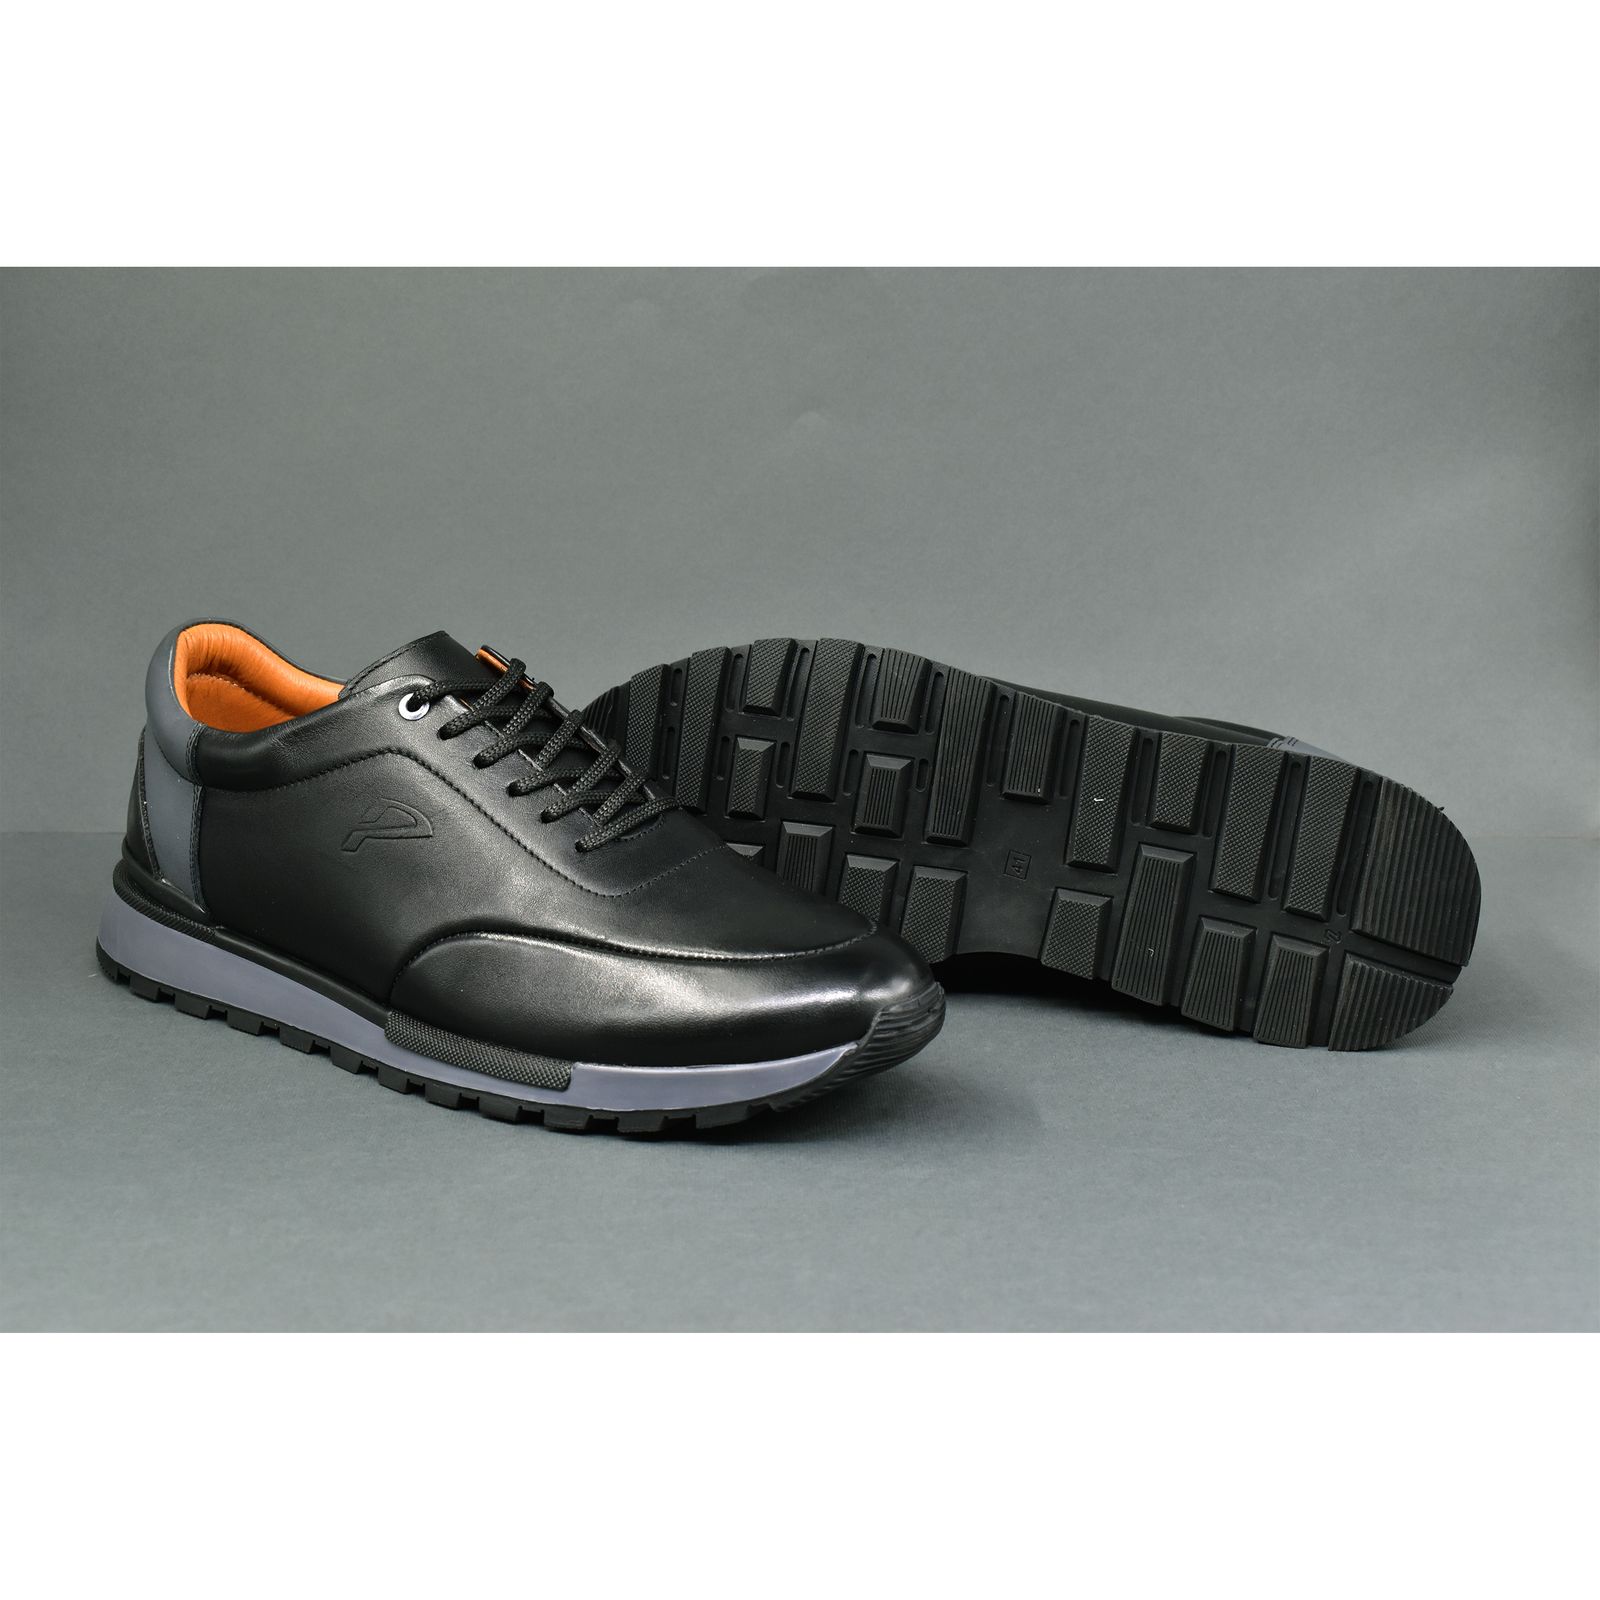 کفش روزمره مردانه پاما مدل ME-680 کد G1807 -  - 6